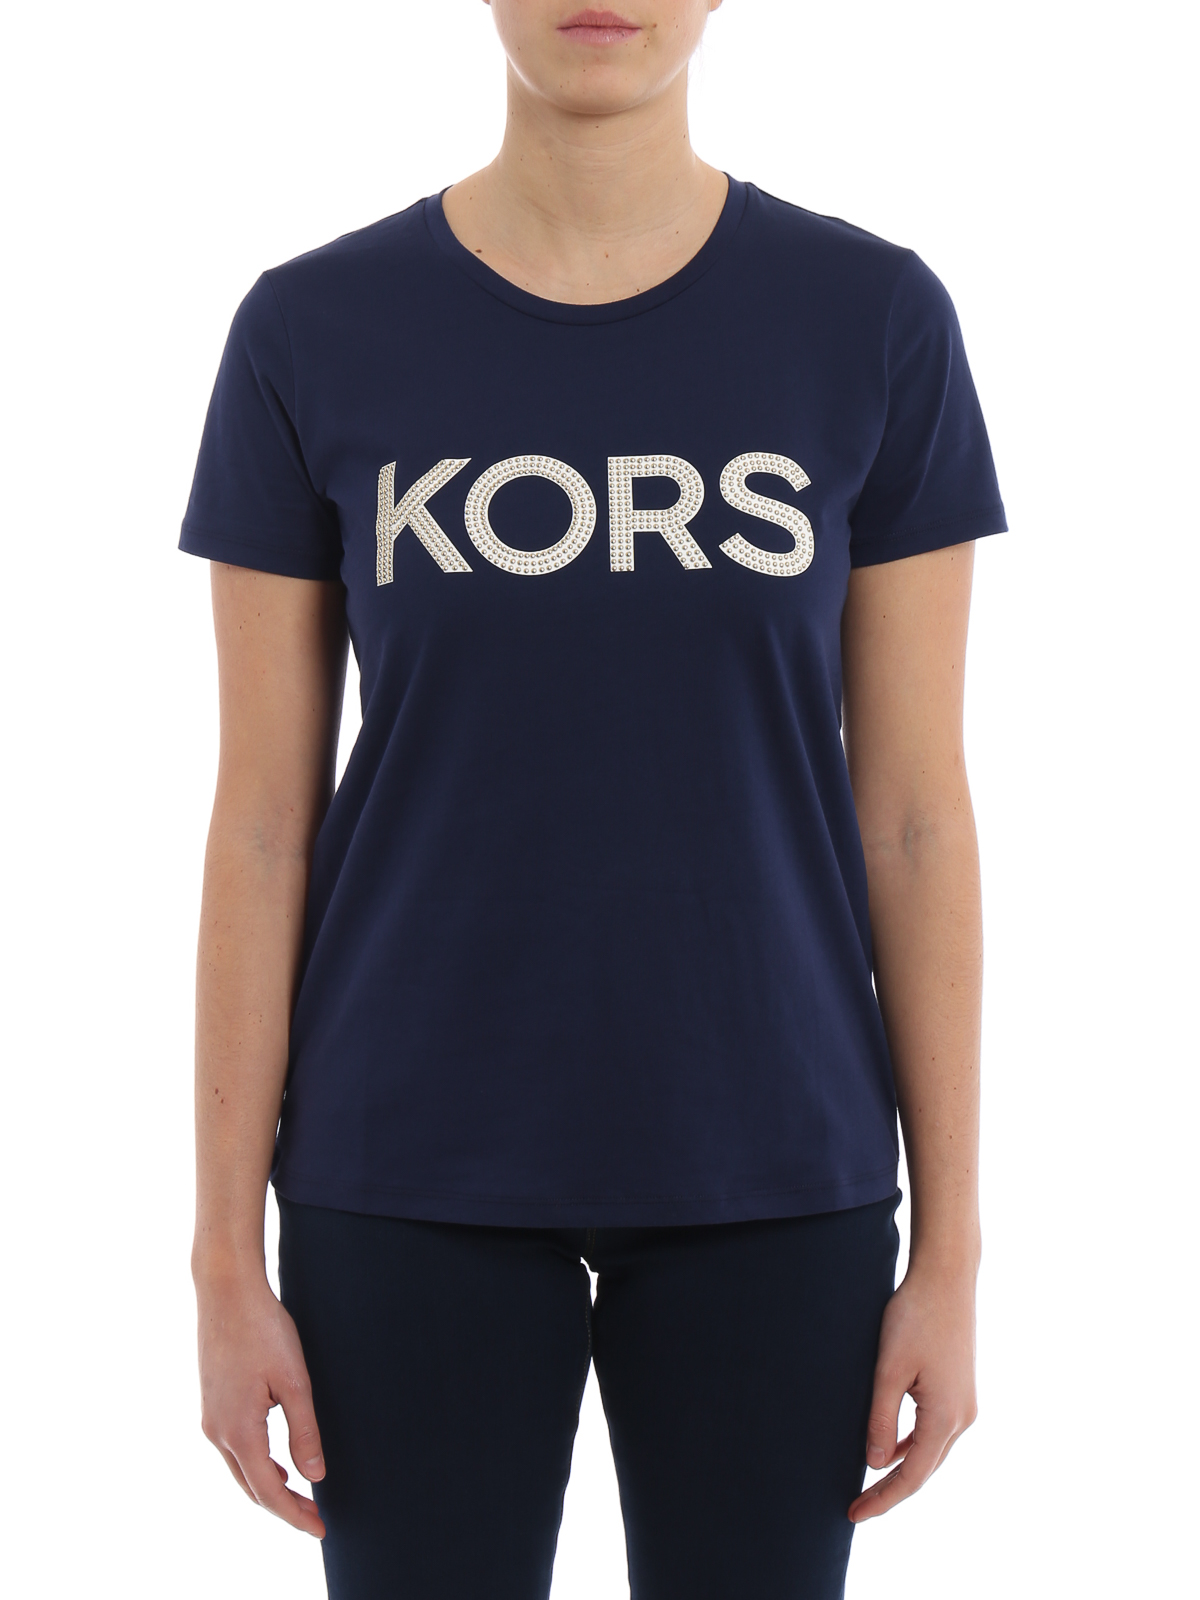 T-shirts Michael Kors - Studded Kors logo blue cotton T-shirt 